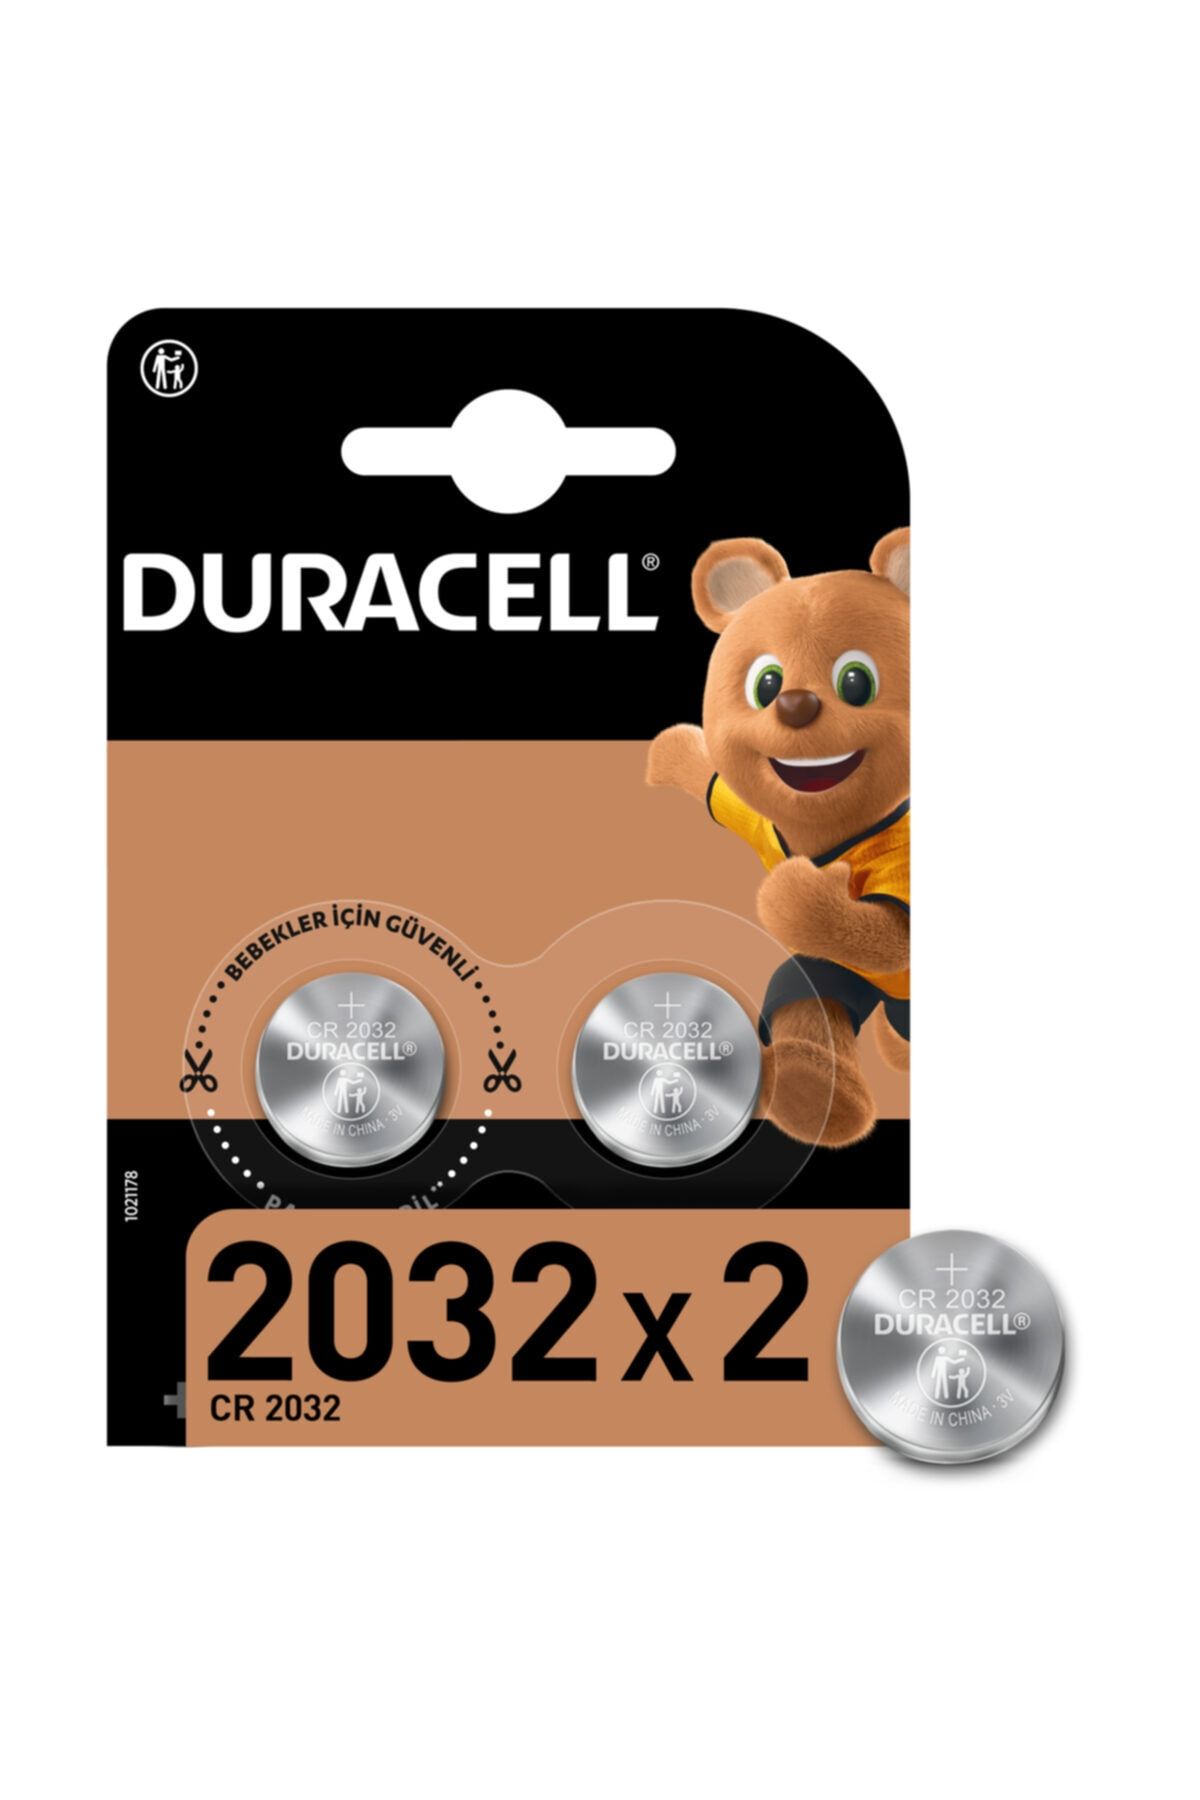 Duracell Özel 2032 Lityum Düğme Pil 3V, 2'li paket (DL2032/CR2032) Fiyatı,  Yorumları - Trendyol